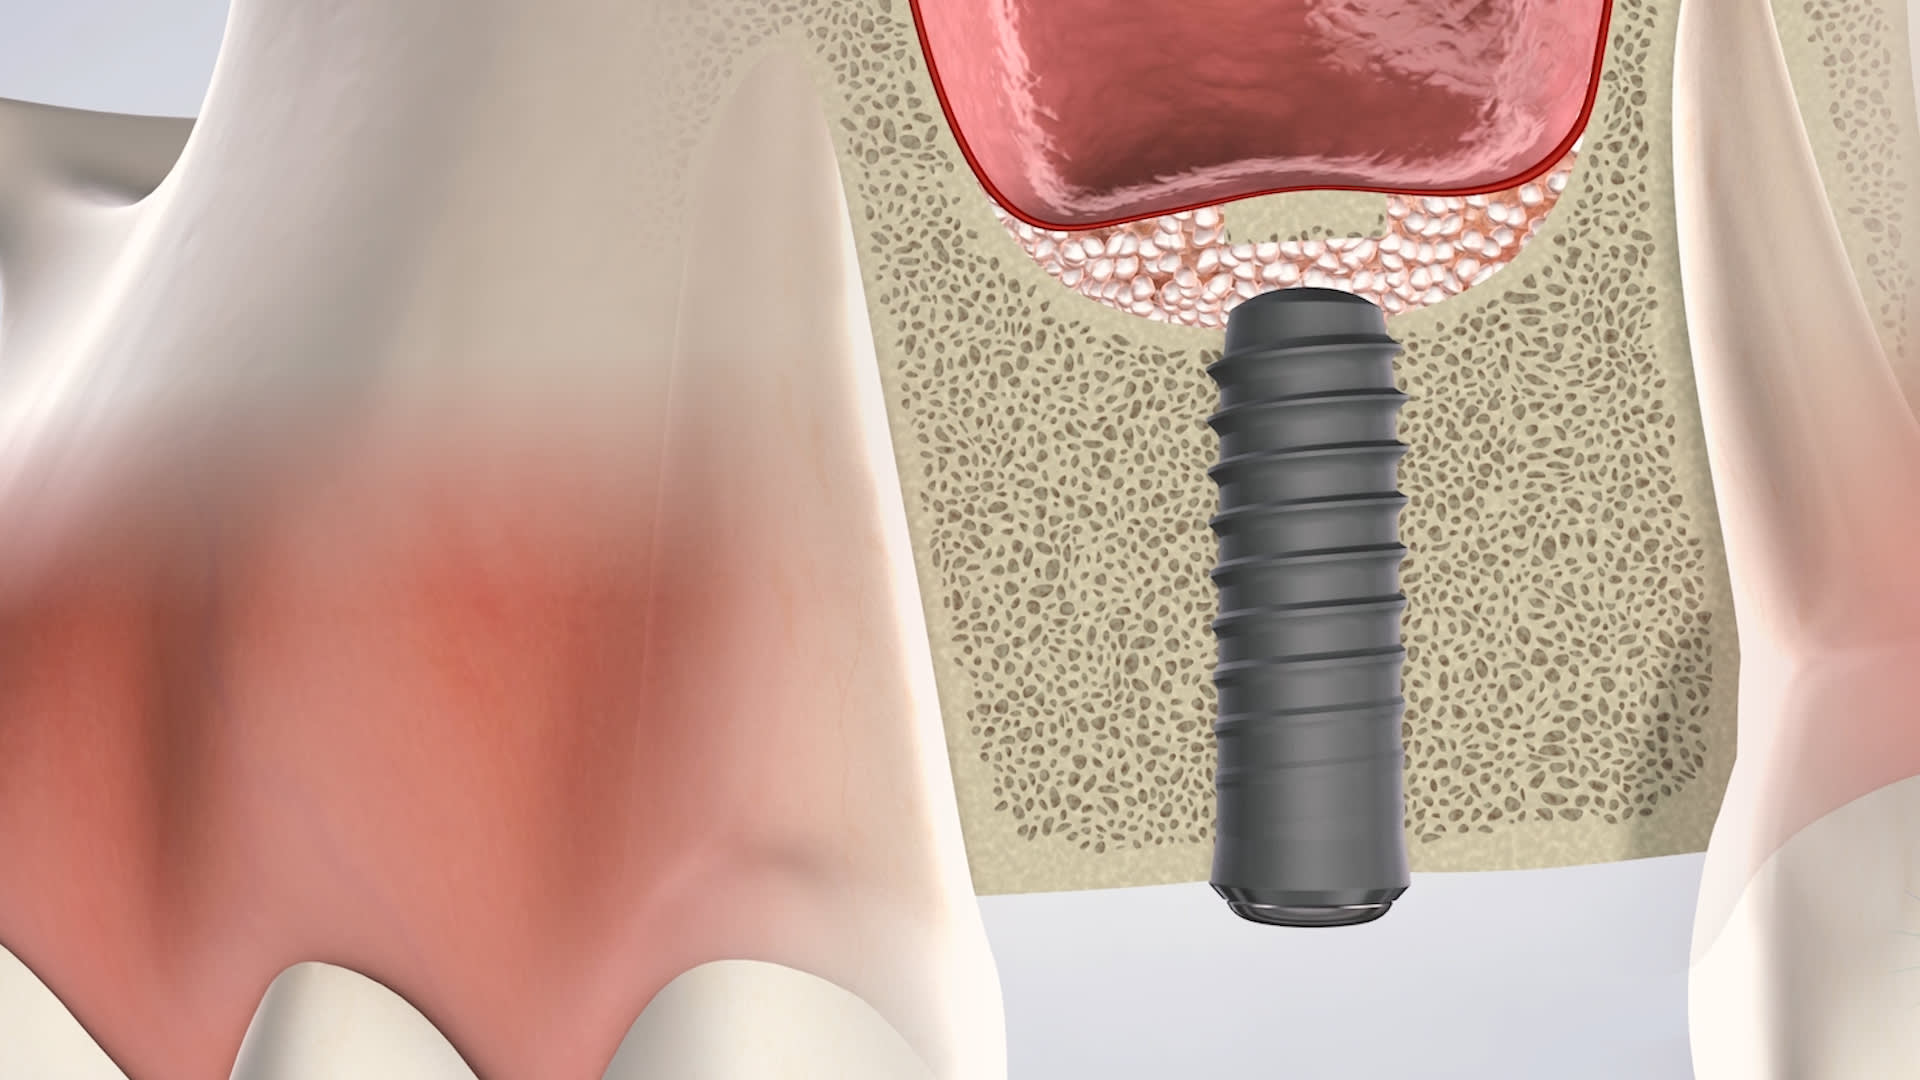 Dental implant post and sinus lift illustration